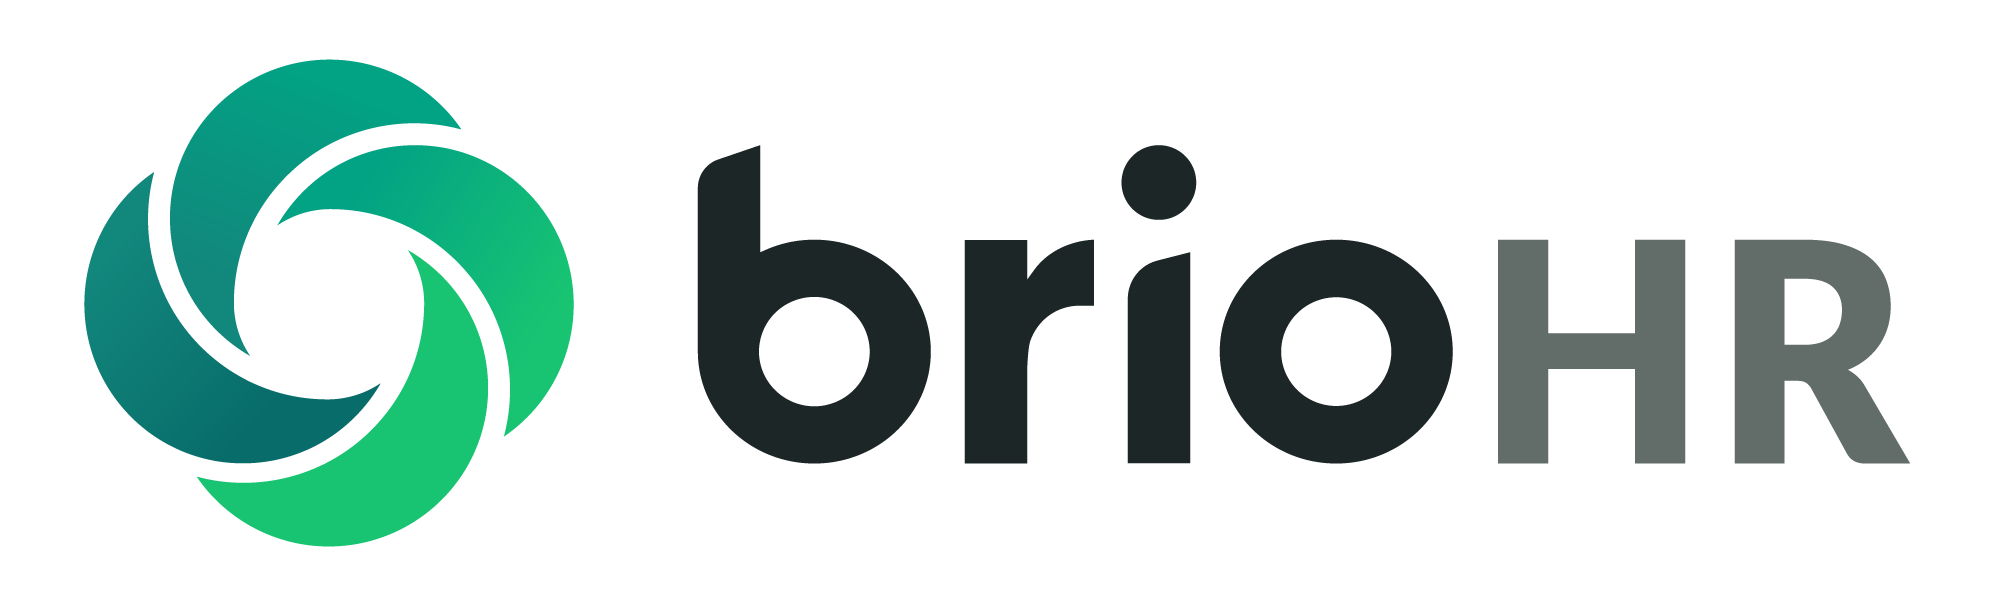 brioHR logo